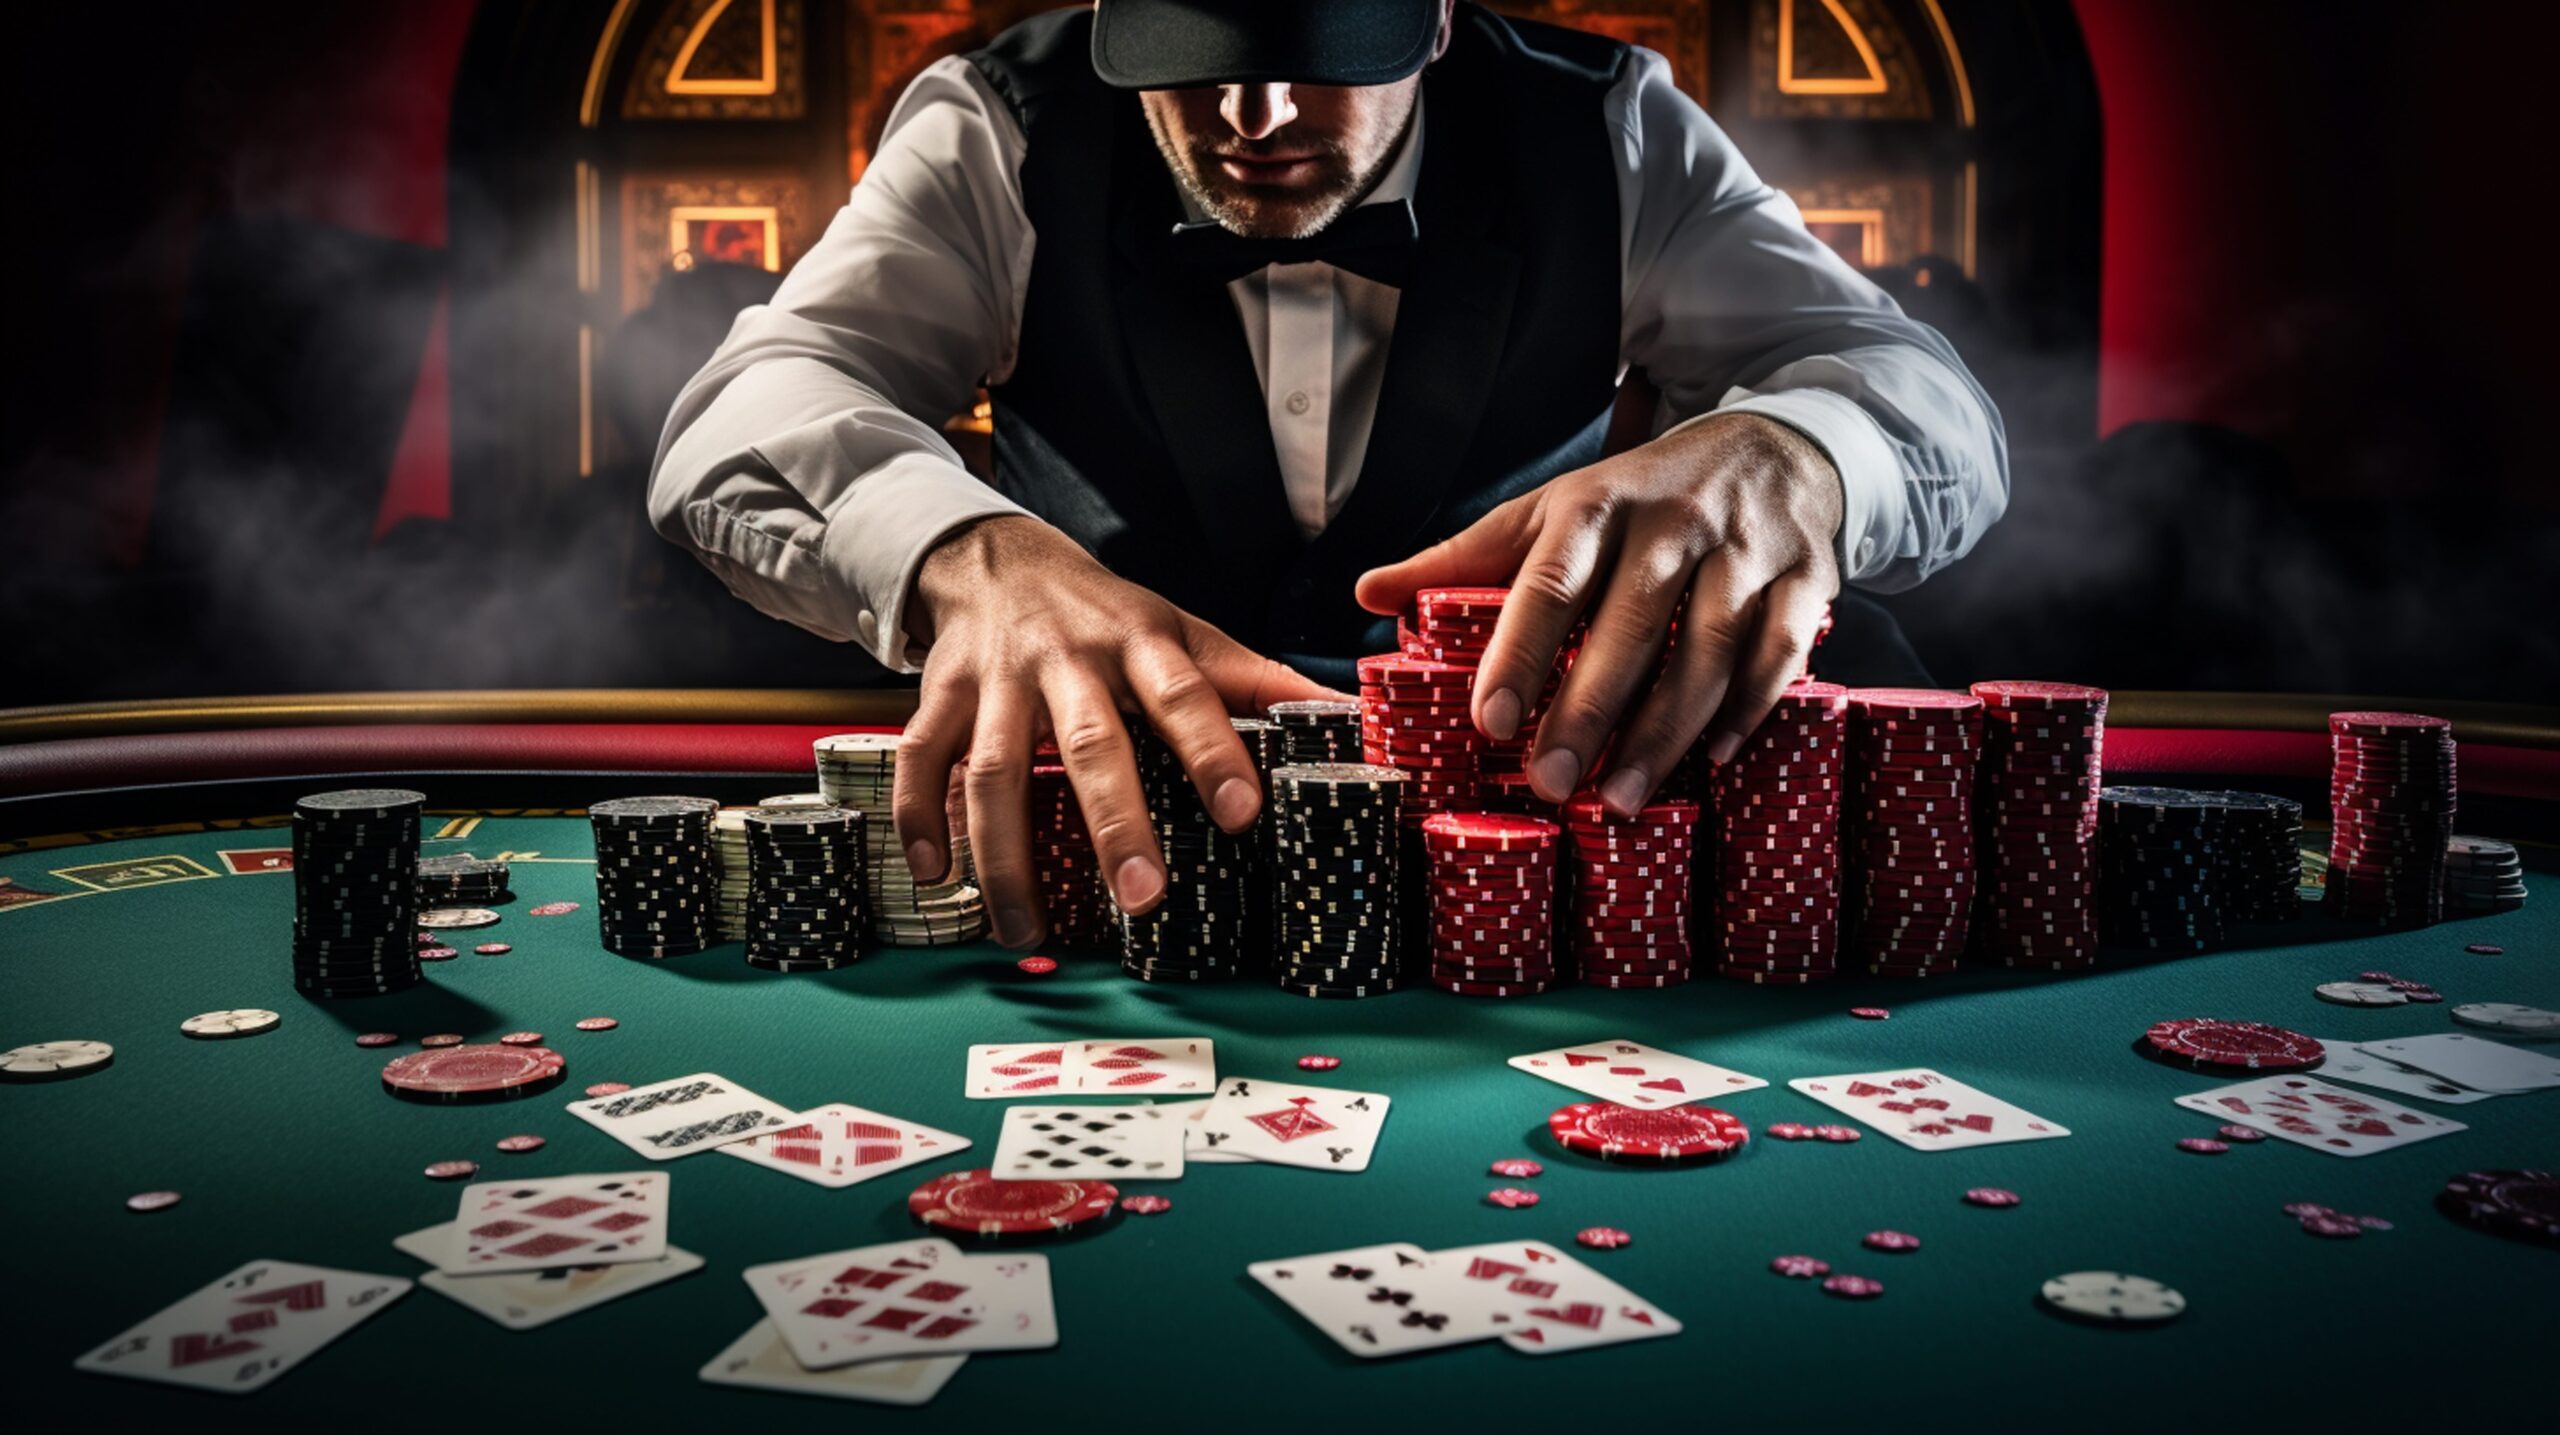 Dealer at a Blackjack casino game in India